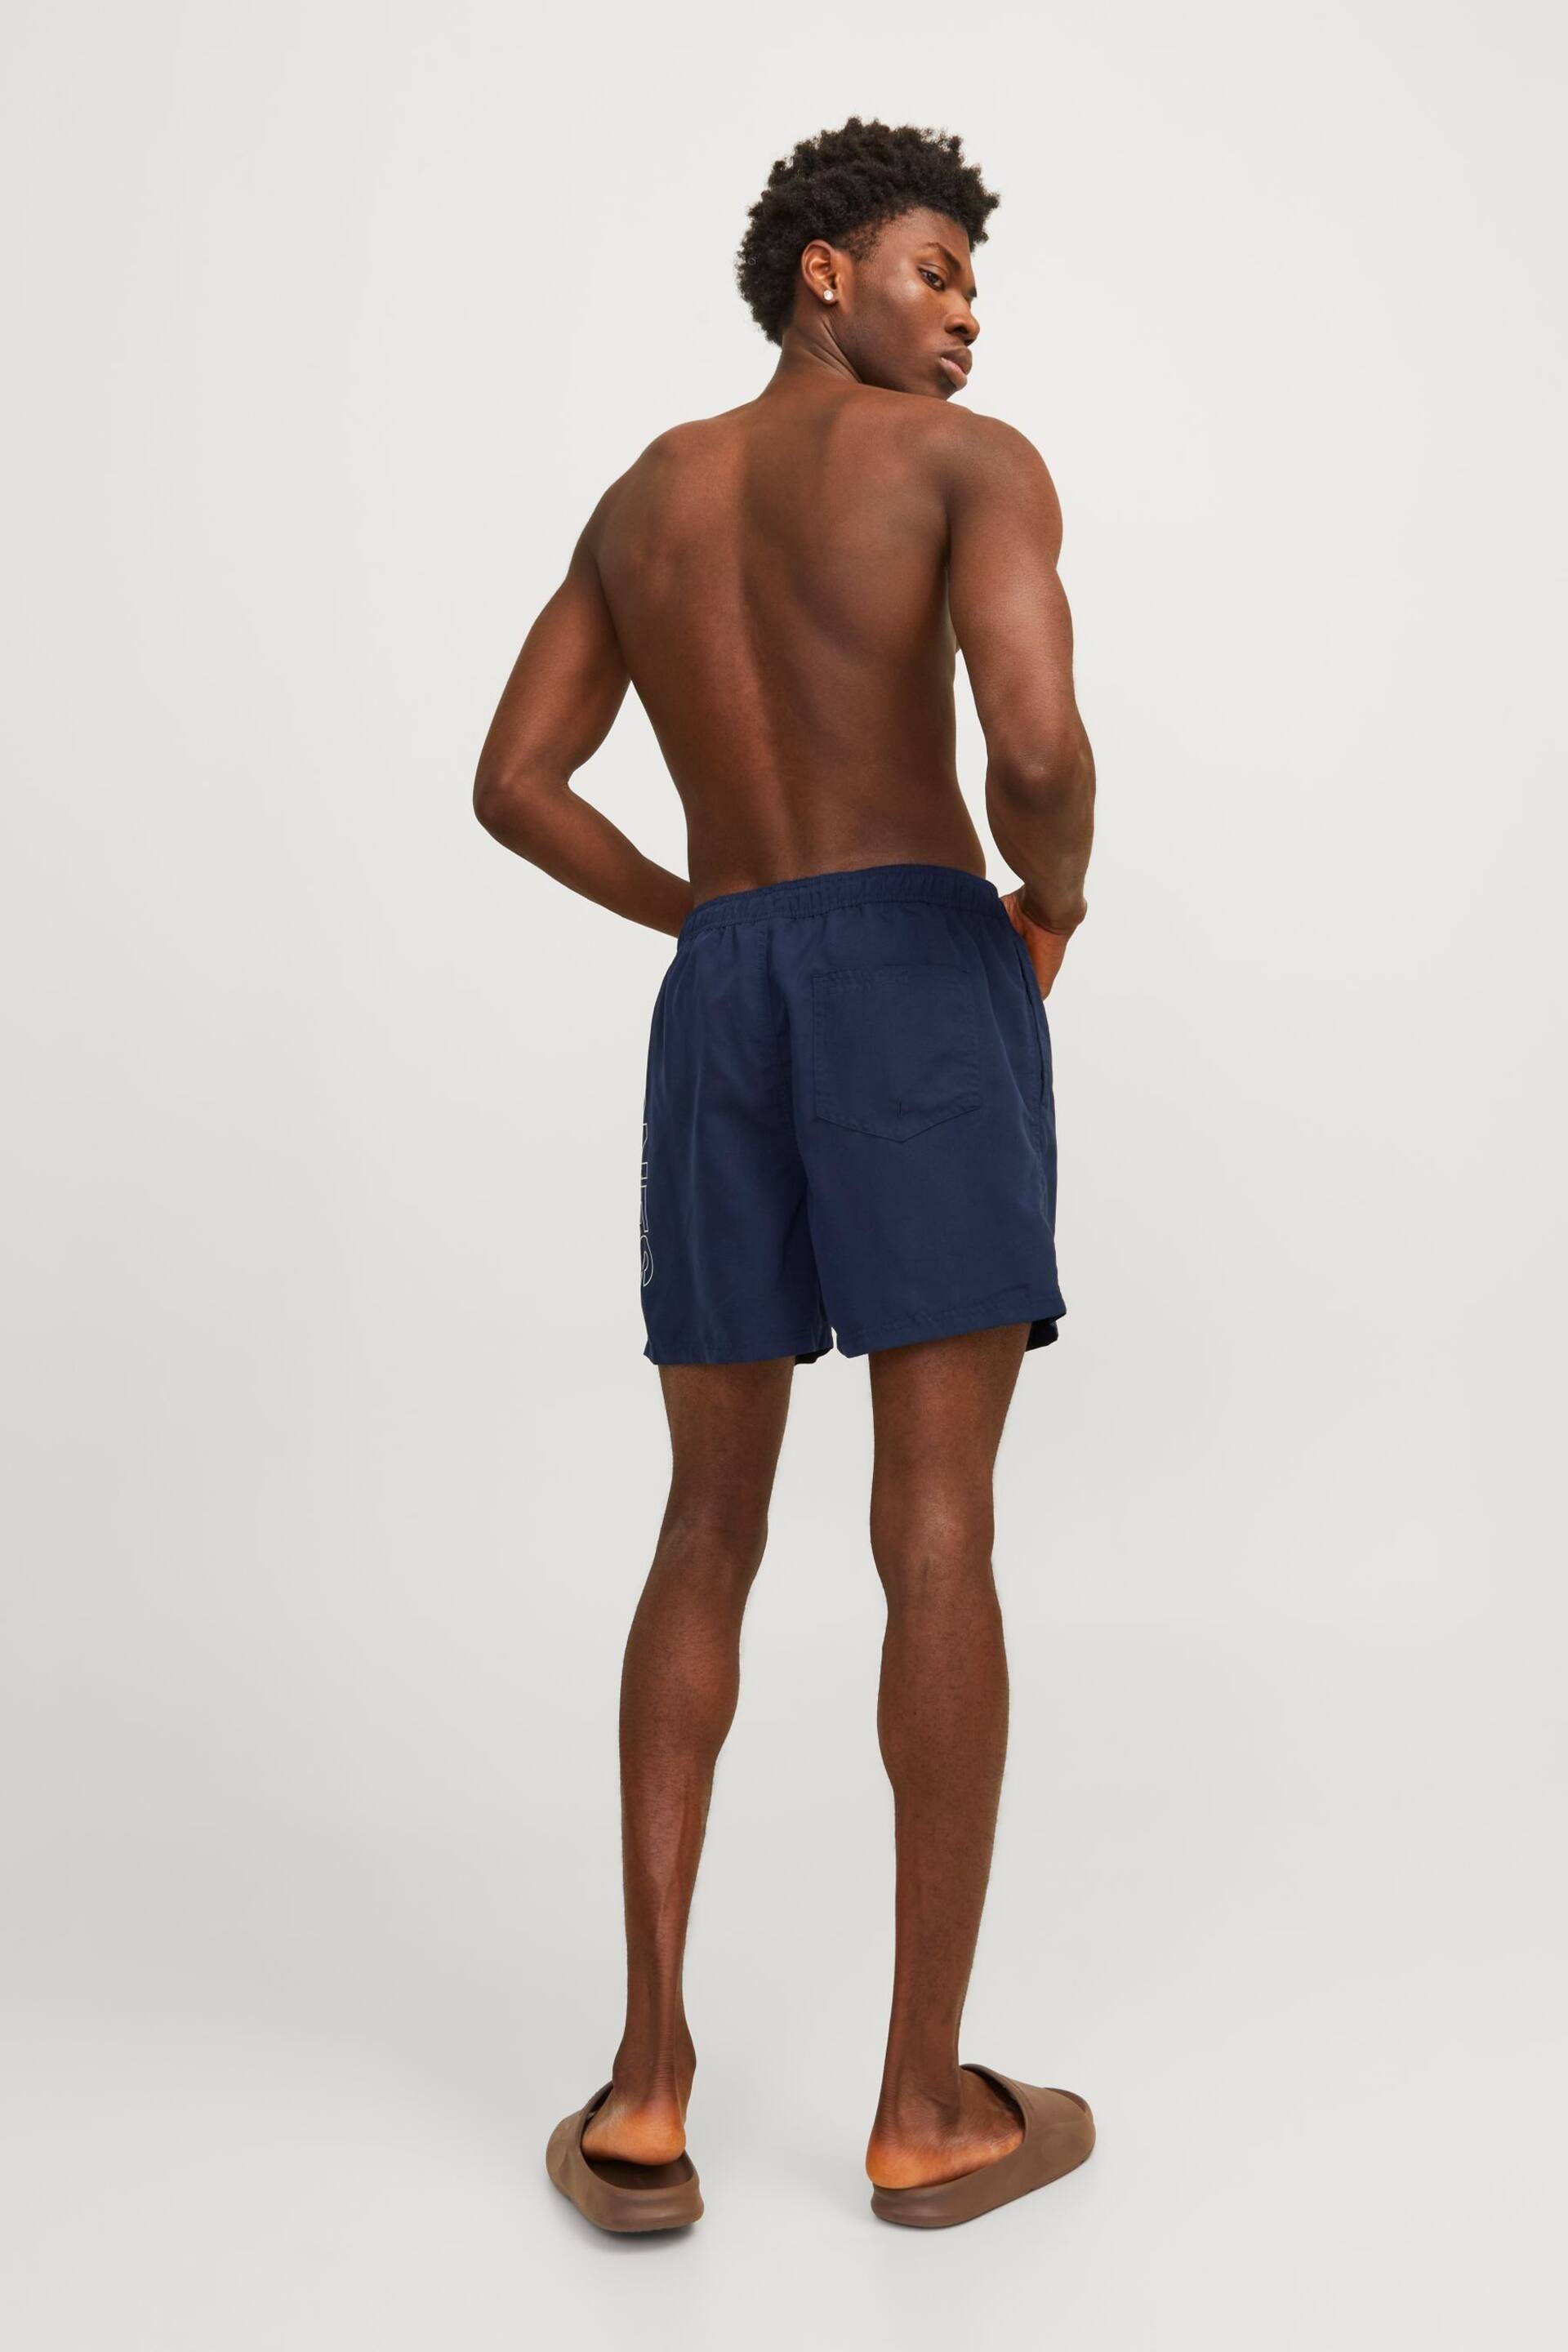 JACK & JONES Navy Blue Swim Shorts With Contrast Lining - Image 3 of 8